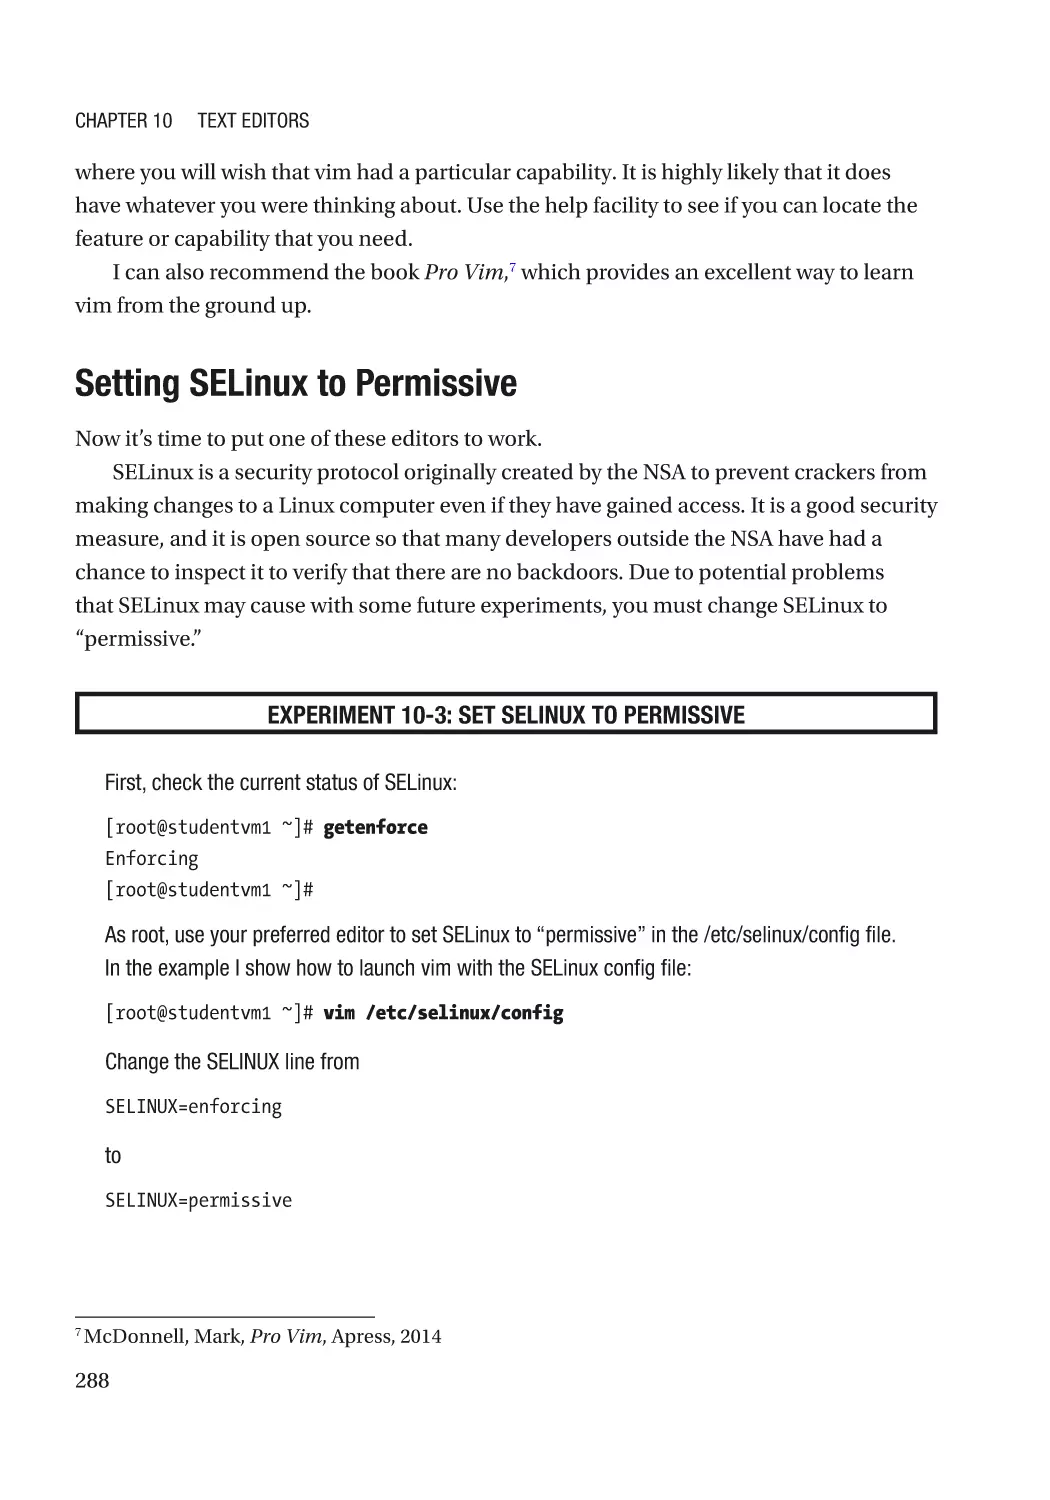 Setting SELinux to Permissive